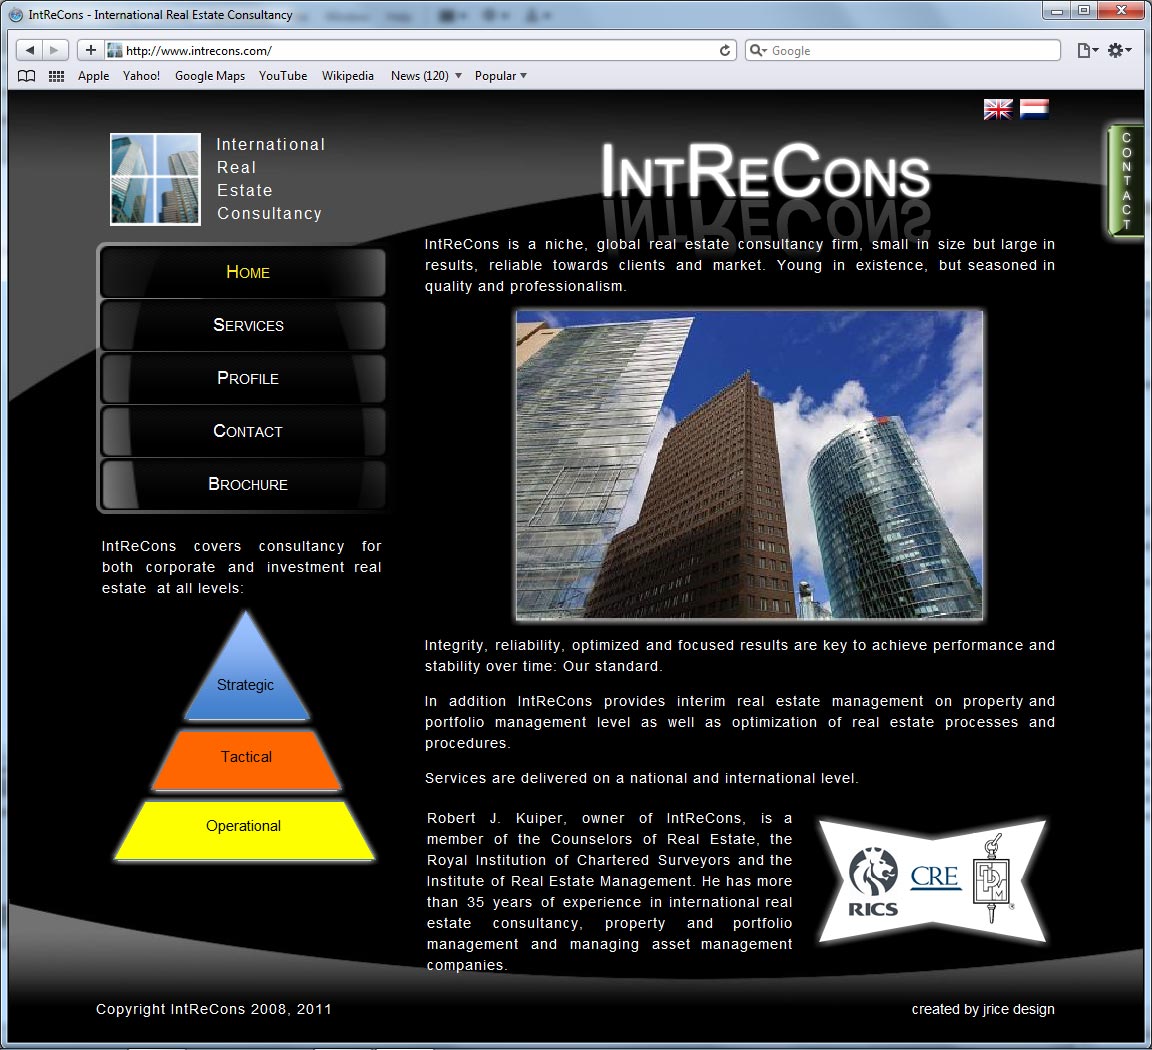 IntReCons.com